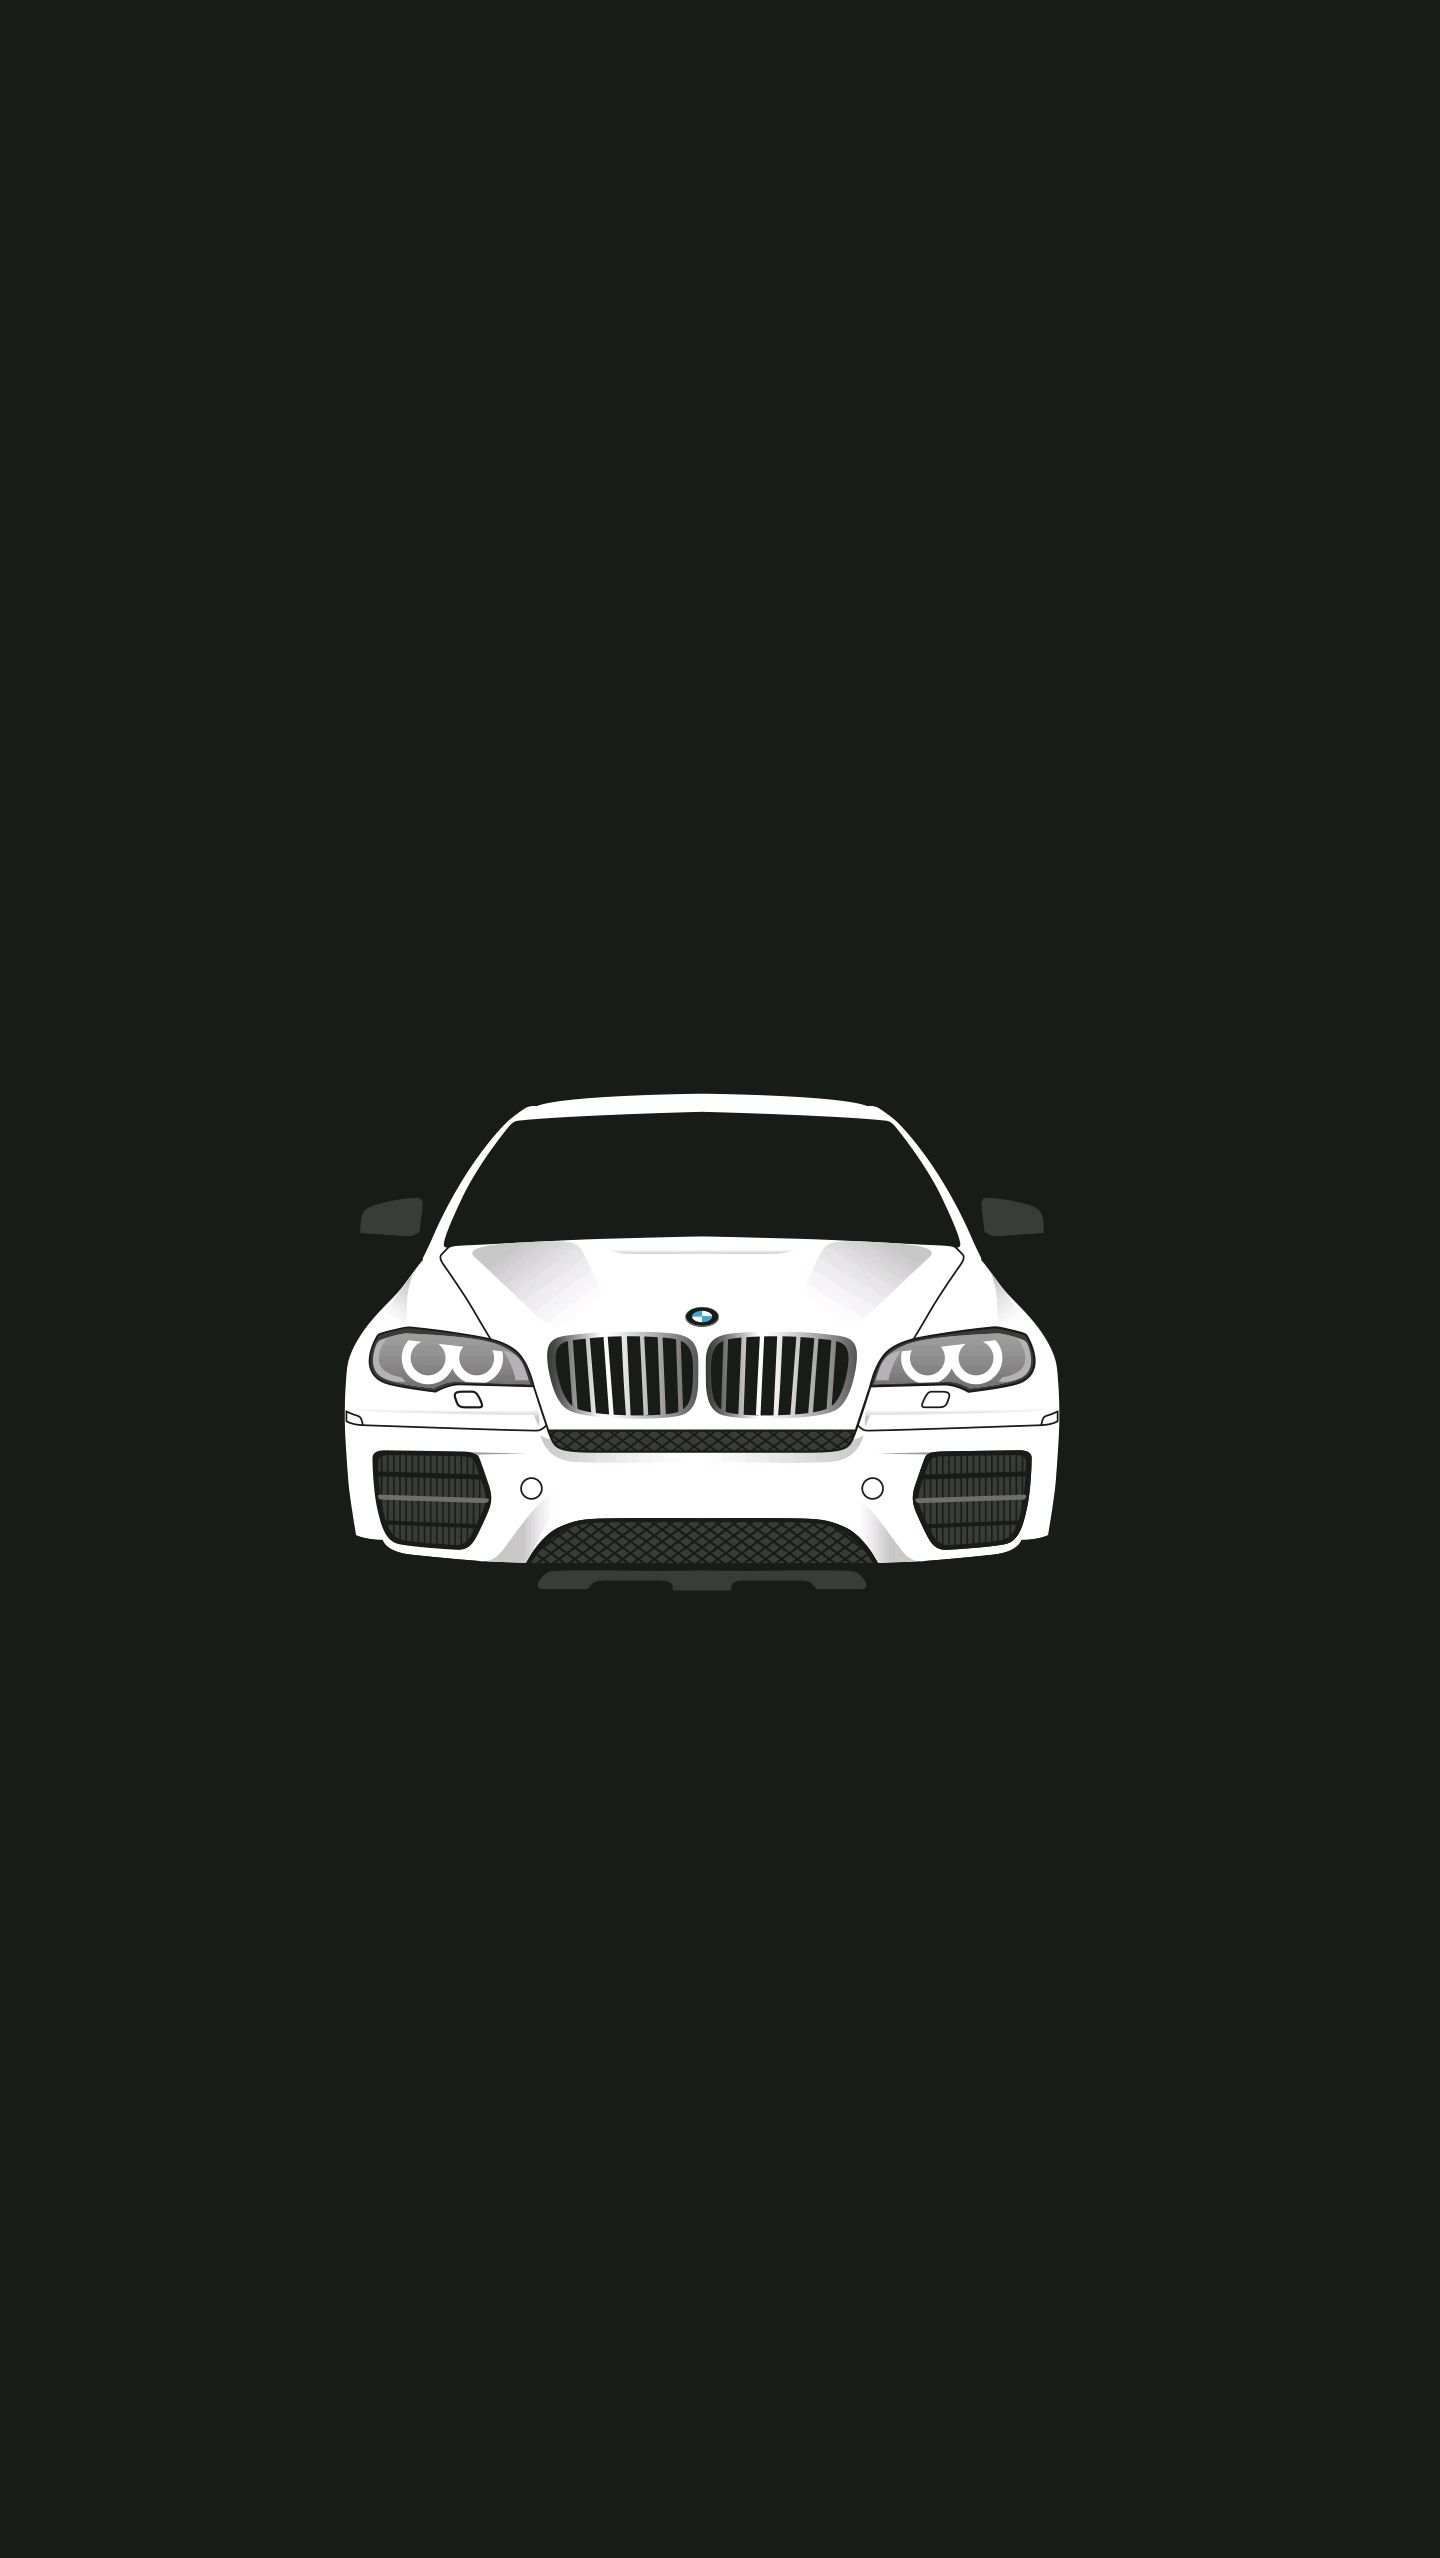 Minimal BMW Car Wallpaper. Car iphone wallpaper, Bmw wallpaper, Bmw iphone wallpaper